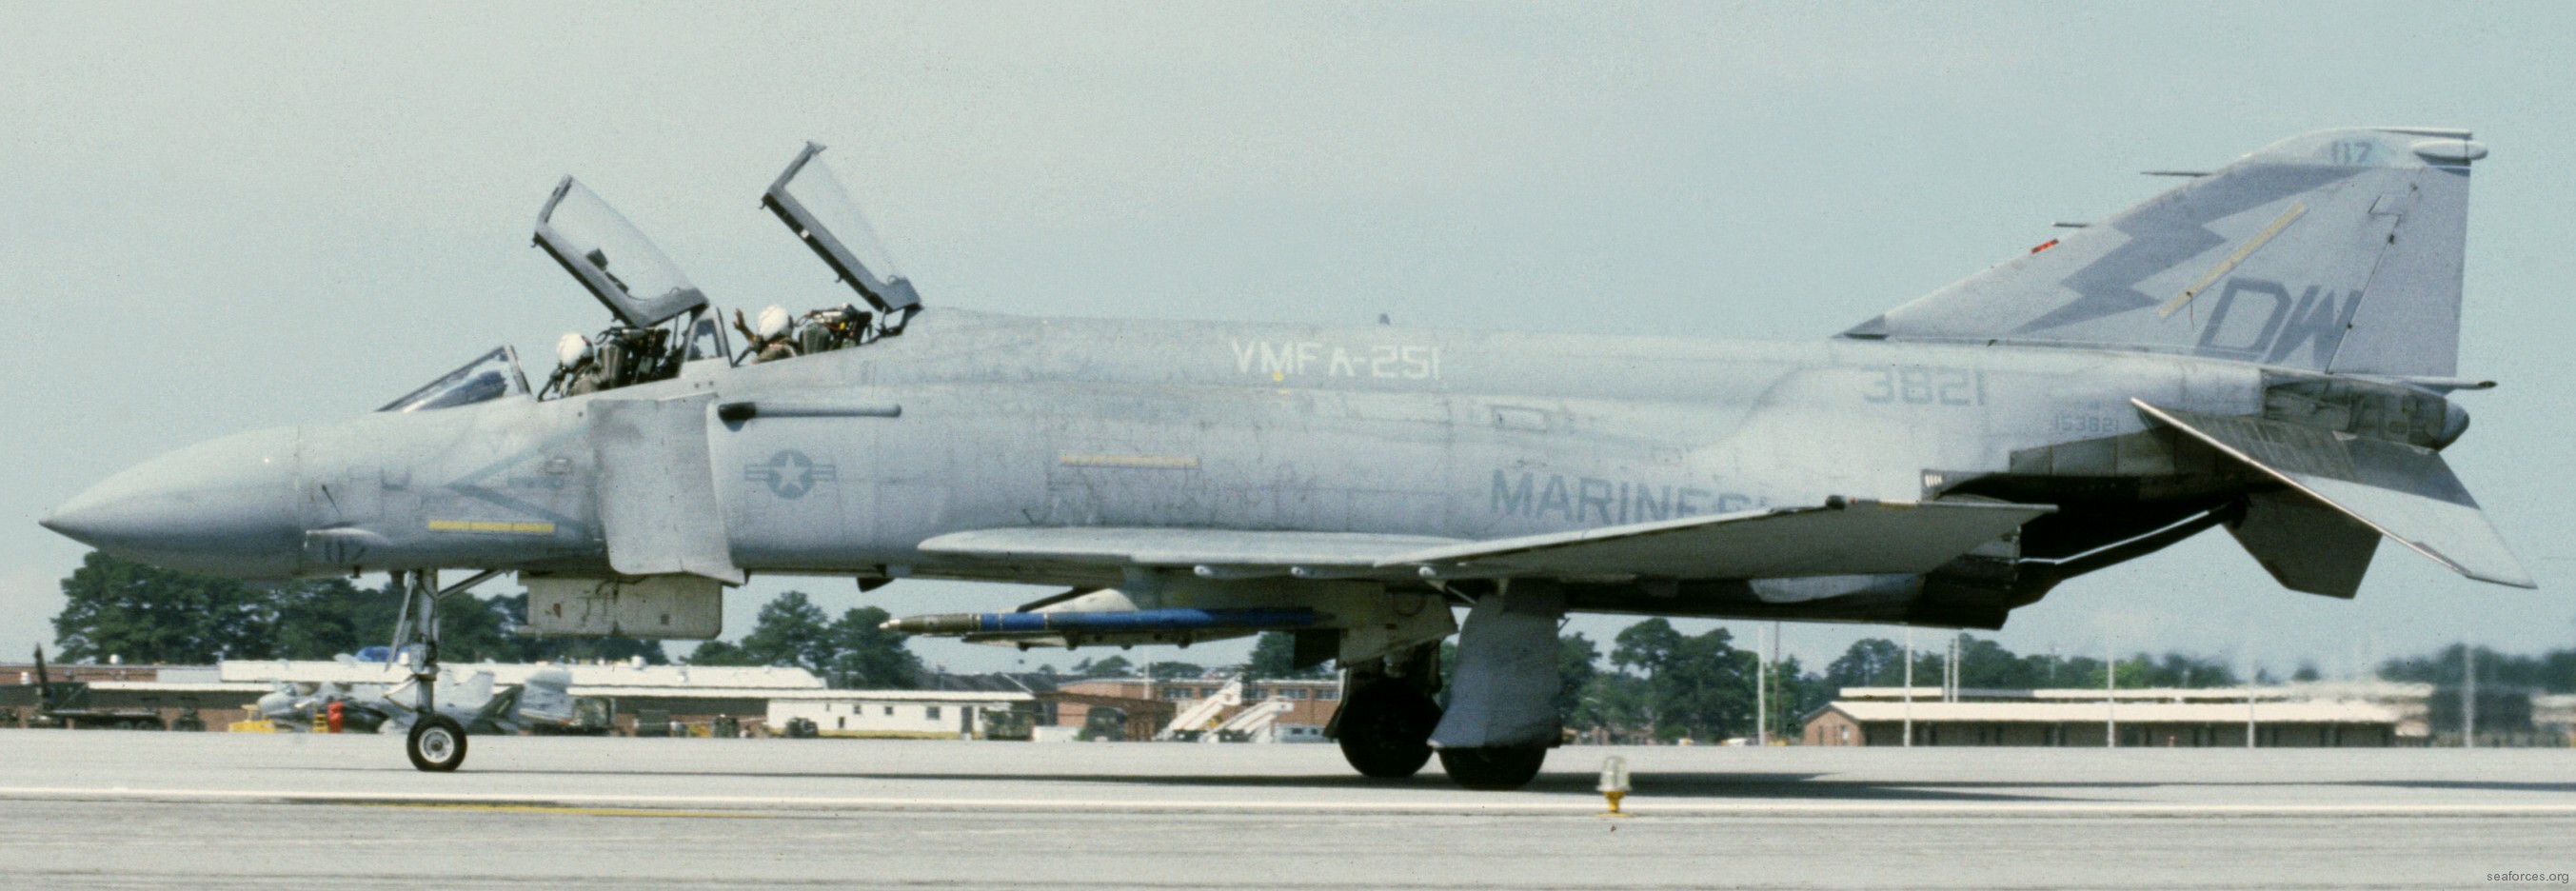 vmfa-251 thunderbolts marine fighter attack squadron f-4s phantom ii mcas cherry point north carolina 55